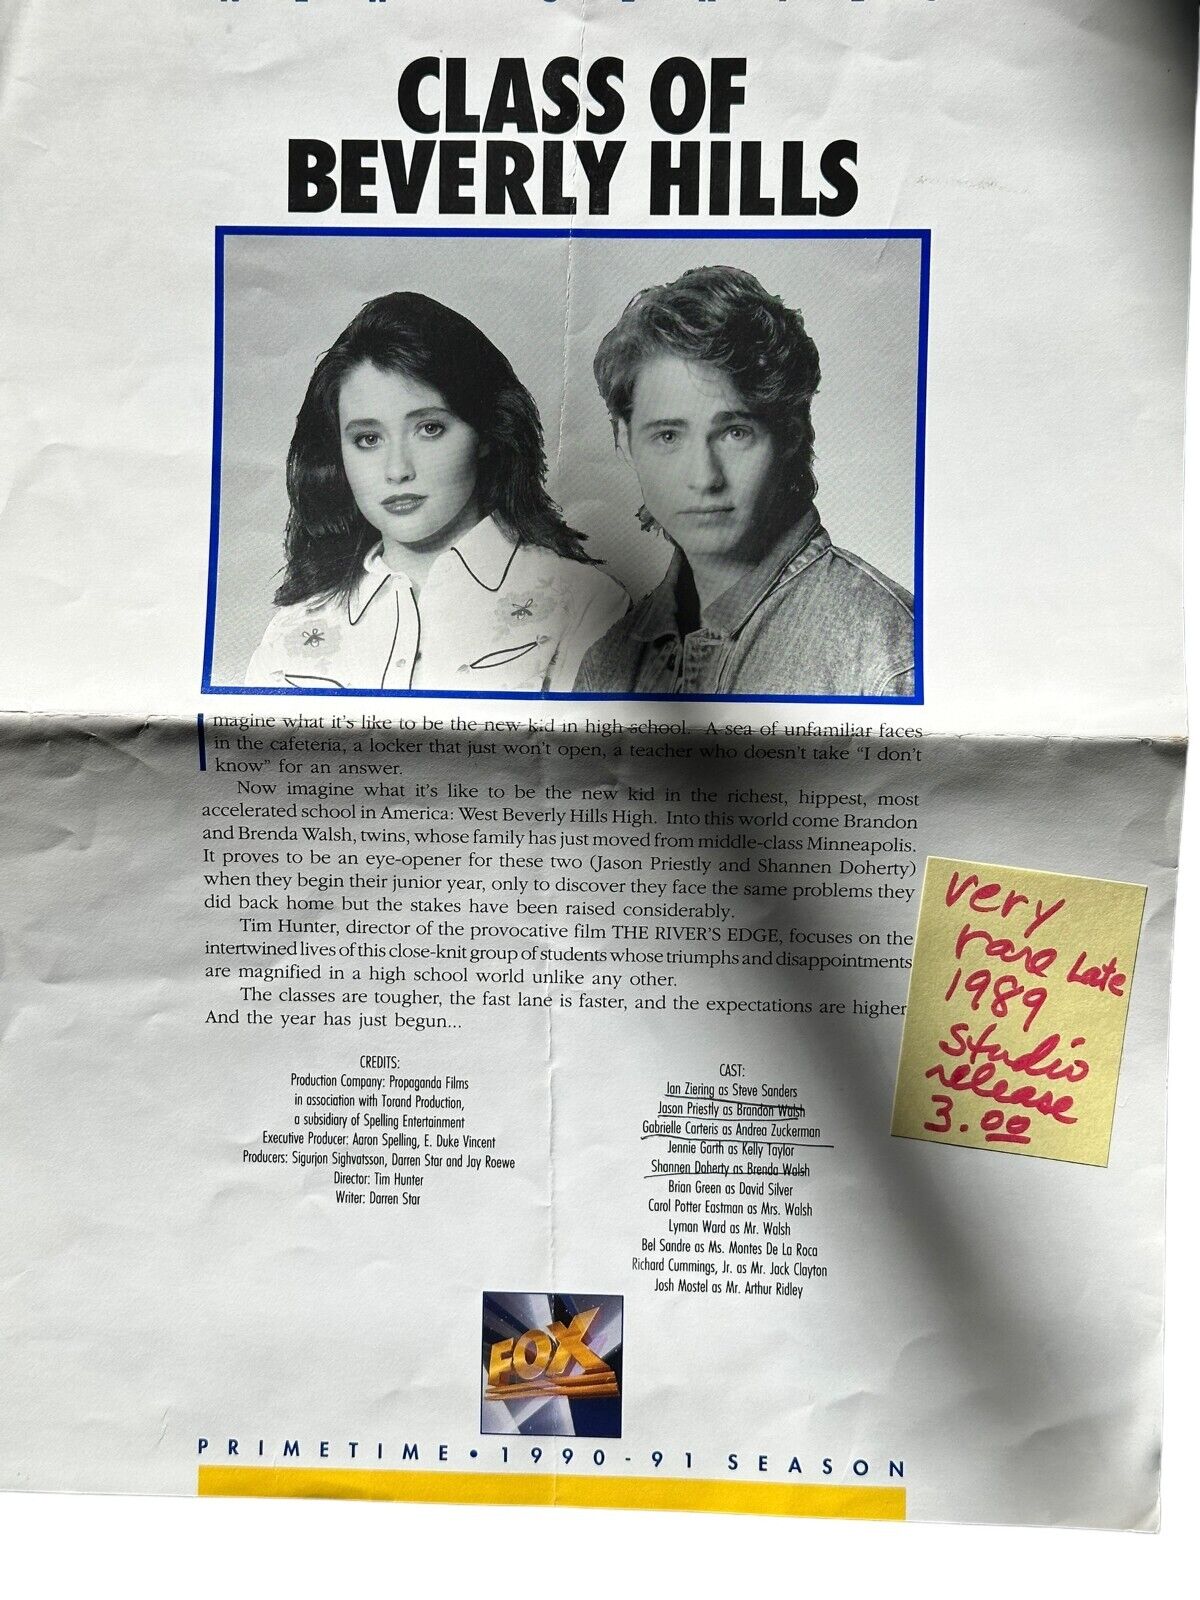 Very rare late 1989 Studio Release Beverly Hills 90210, Primetime 1990-91 season